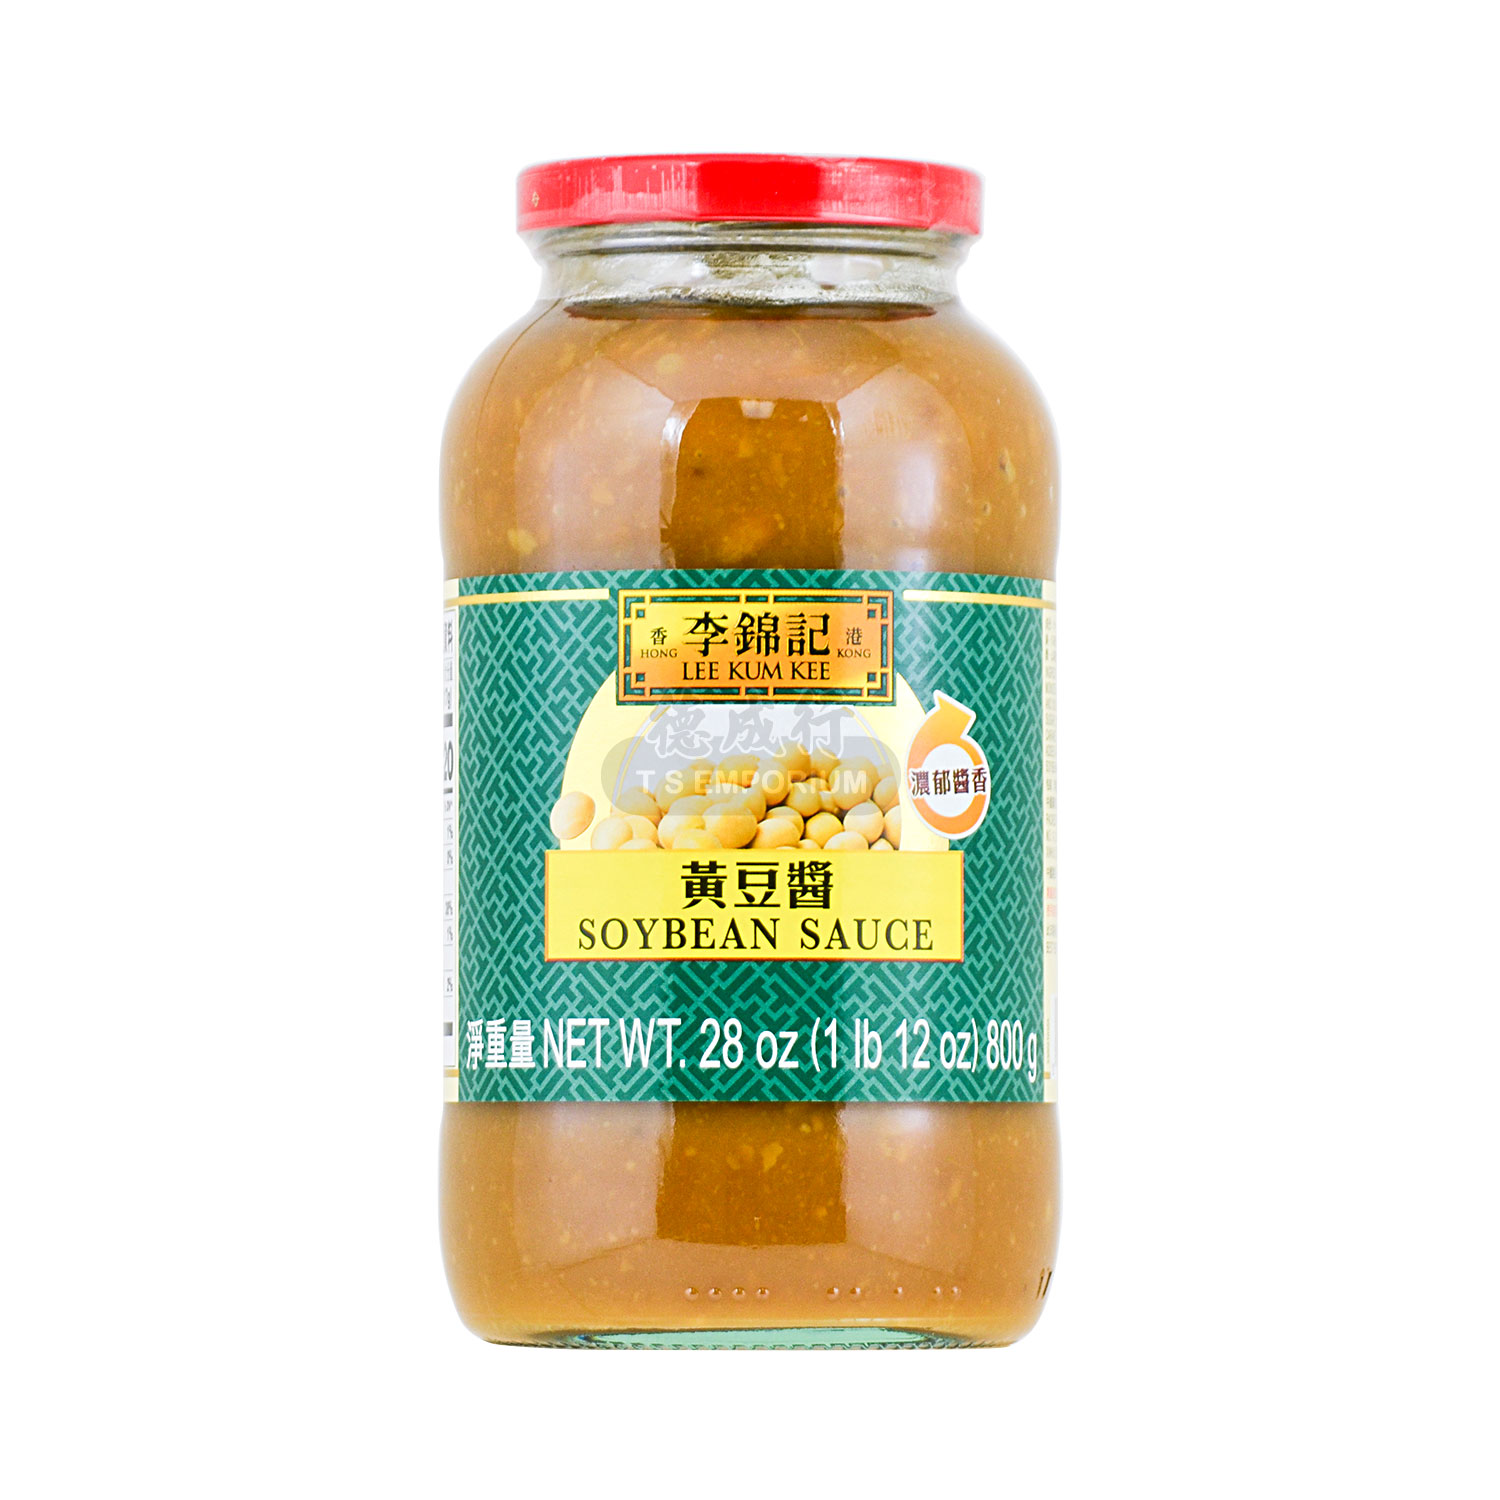 海天 招牌黄豆酱 Signature Soybean Sauce 340g